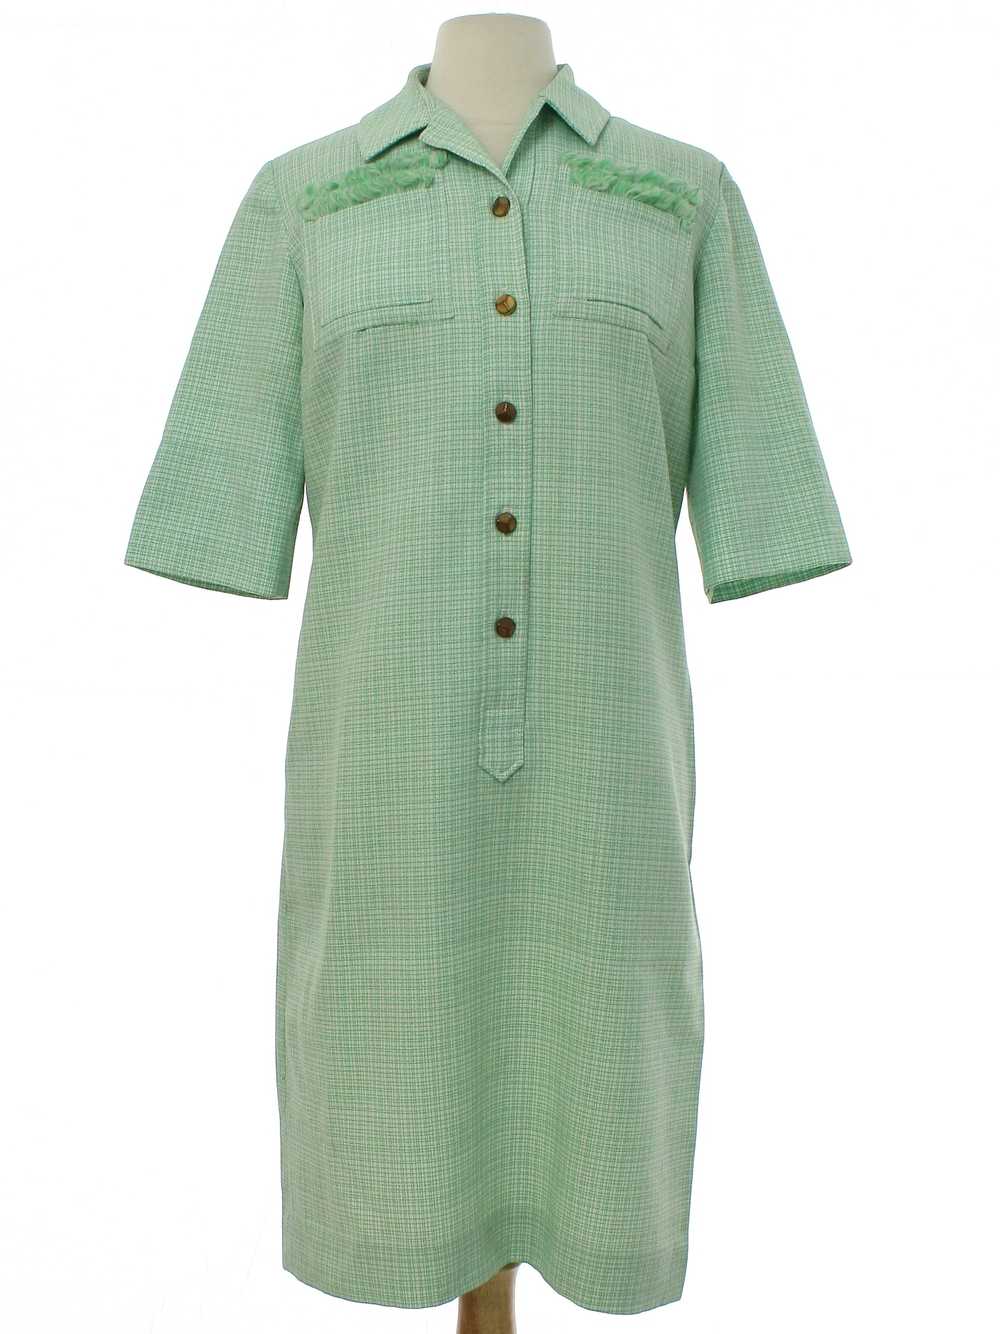 1970's Shirt Dresses Mod Knit Shift Dress - image 1